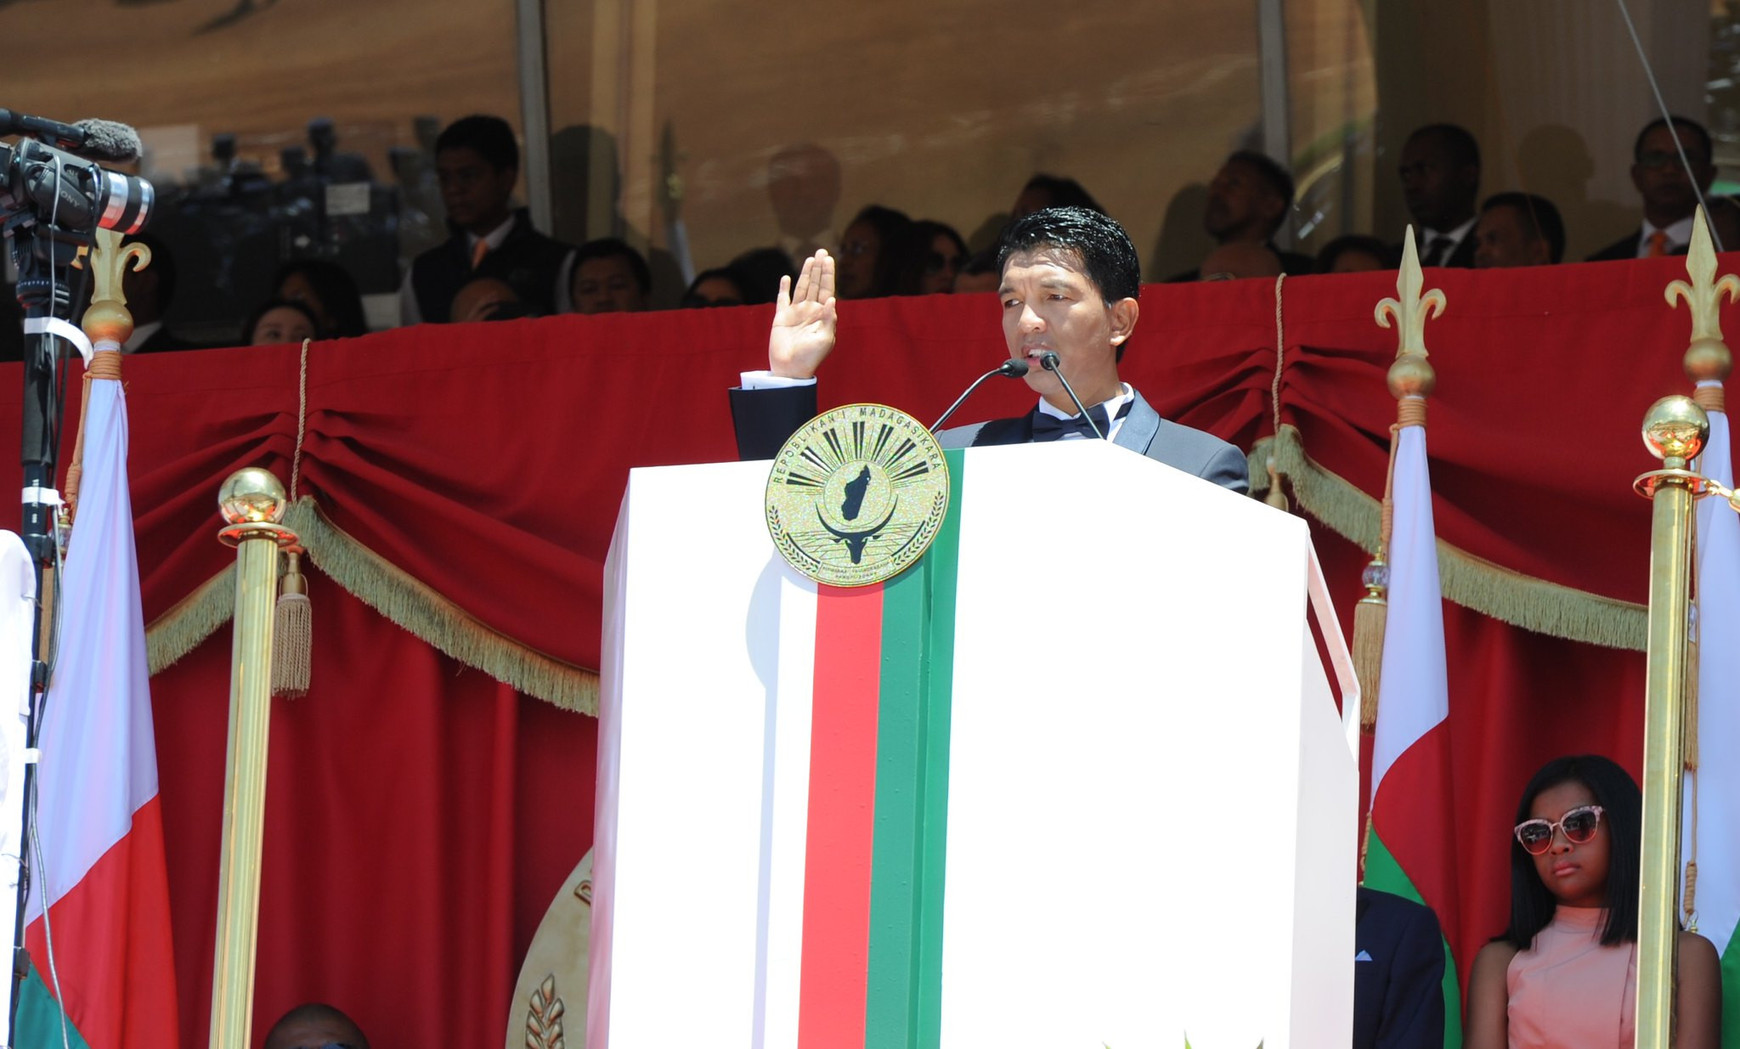 Deputy Minister Luwellyn Landers attends inauguration of Madagascar President Andry Rajoelina, 19 January 2019 À Madagascar, rien ne va plus